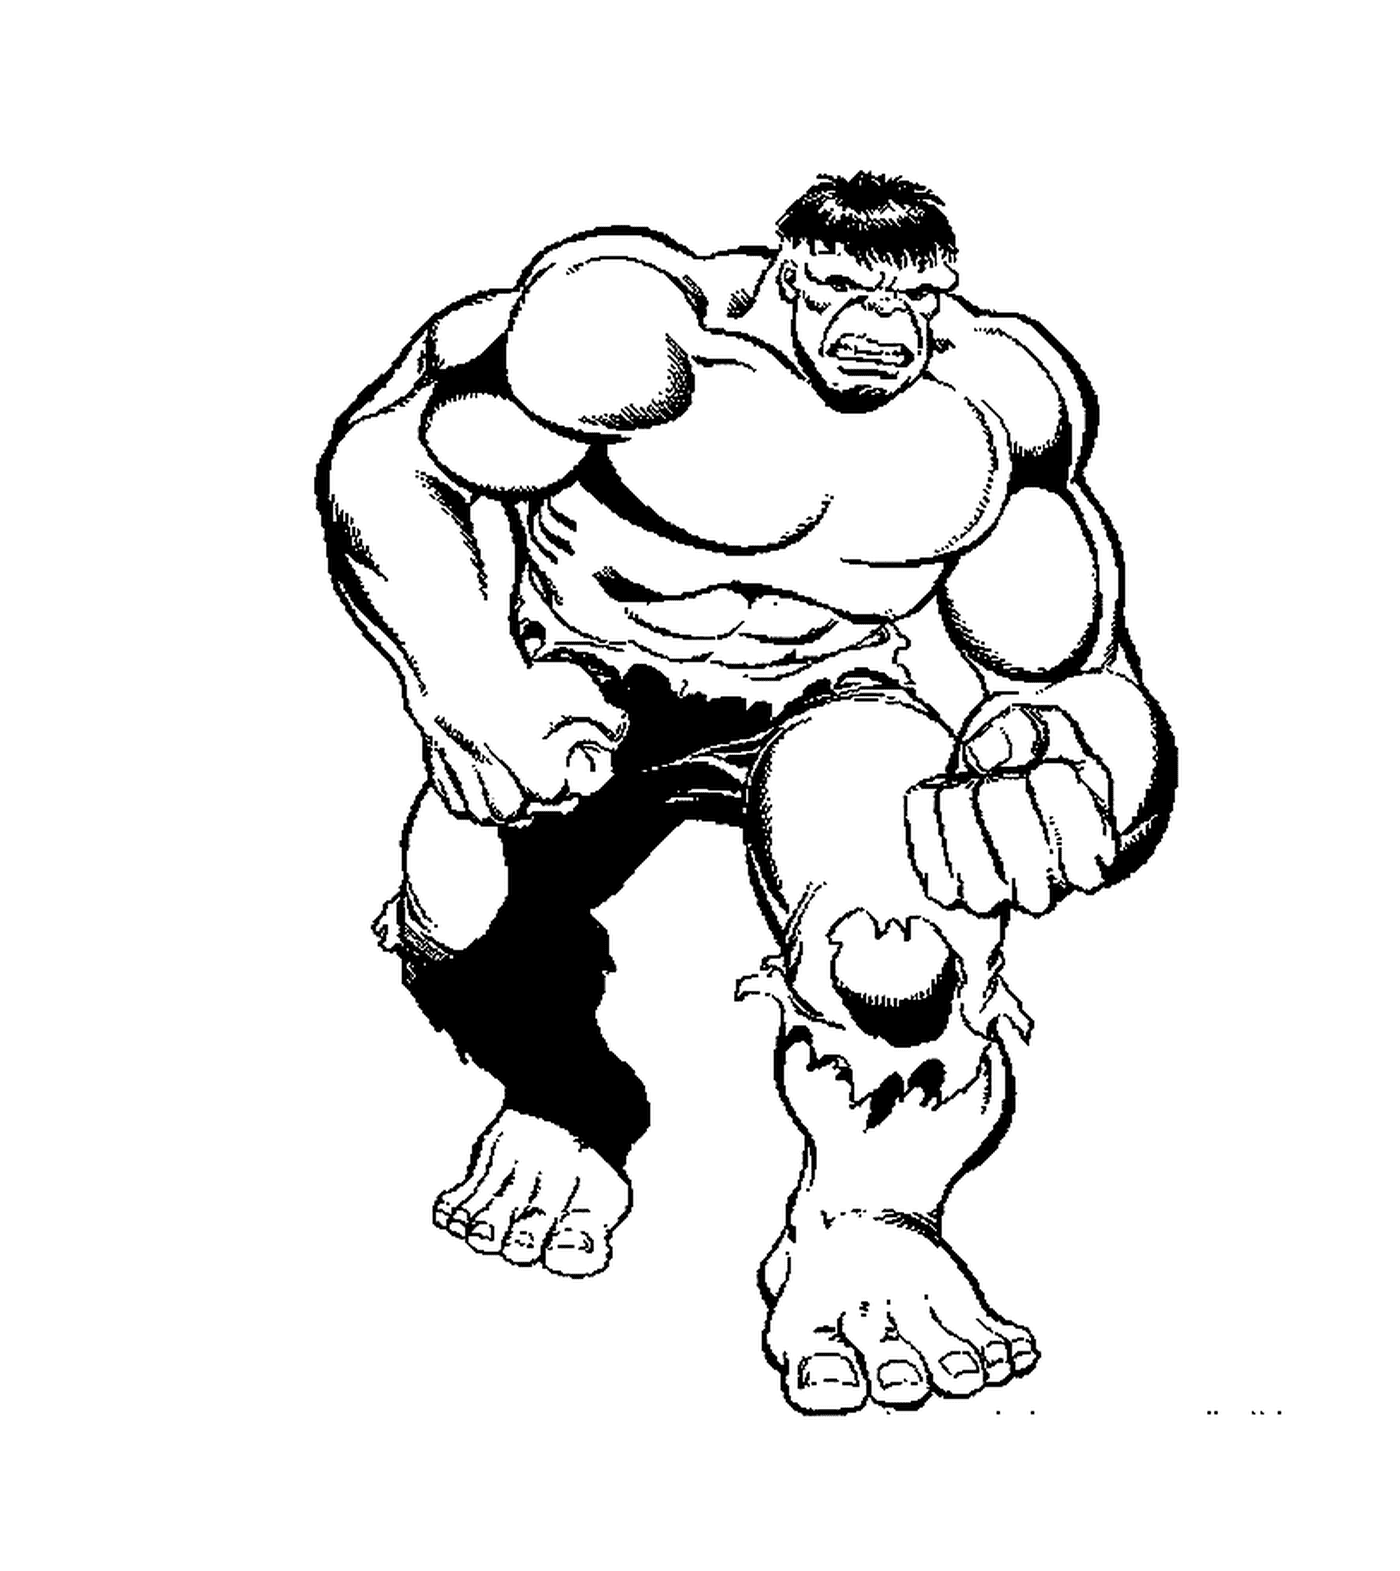  Hulk, simple version 